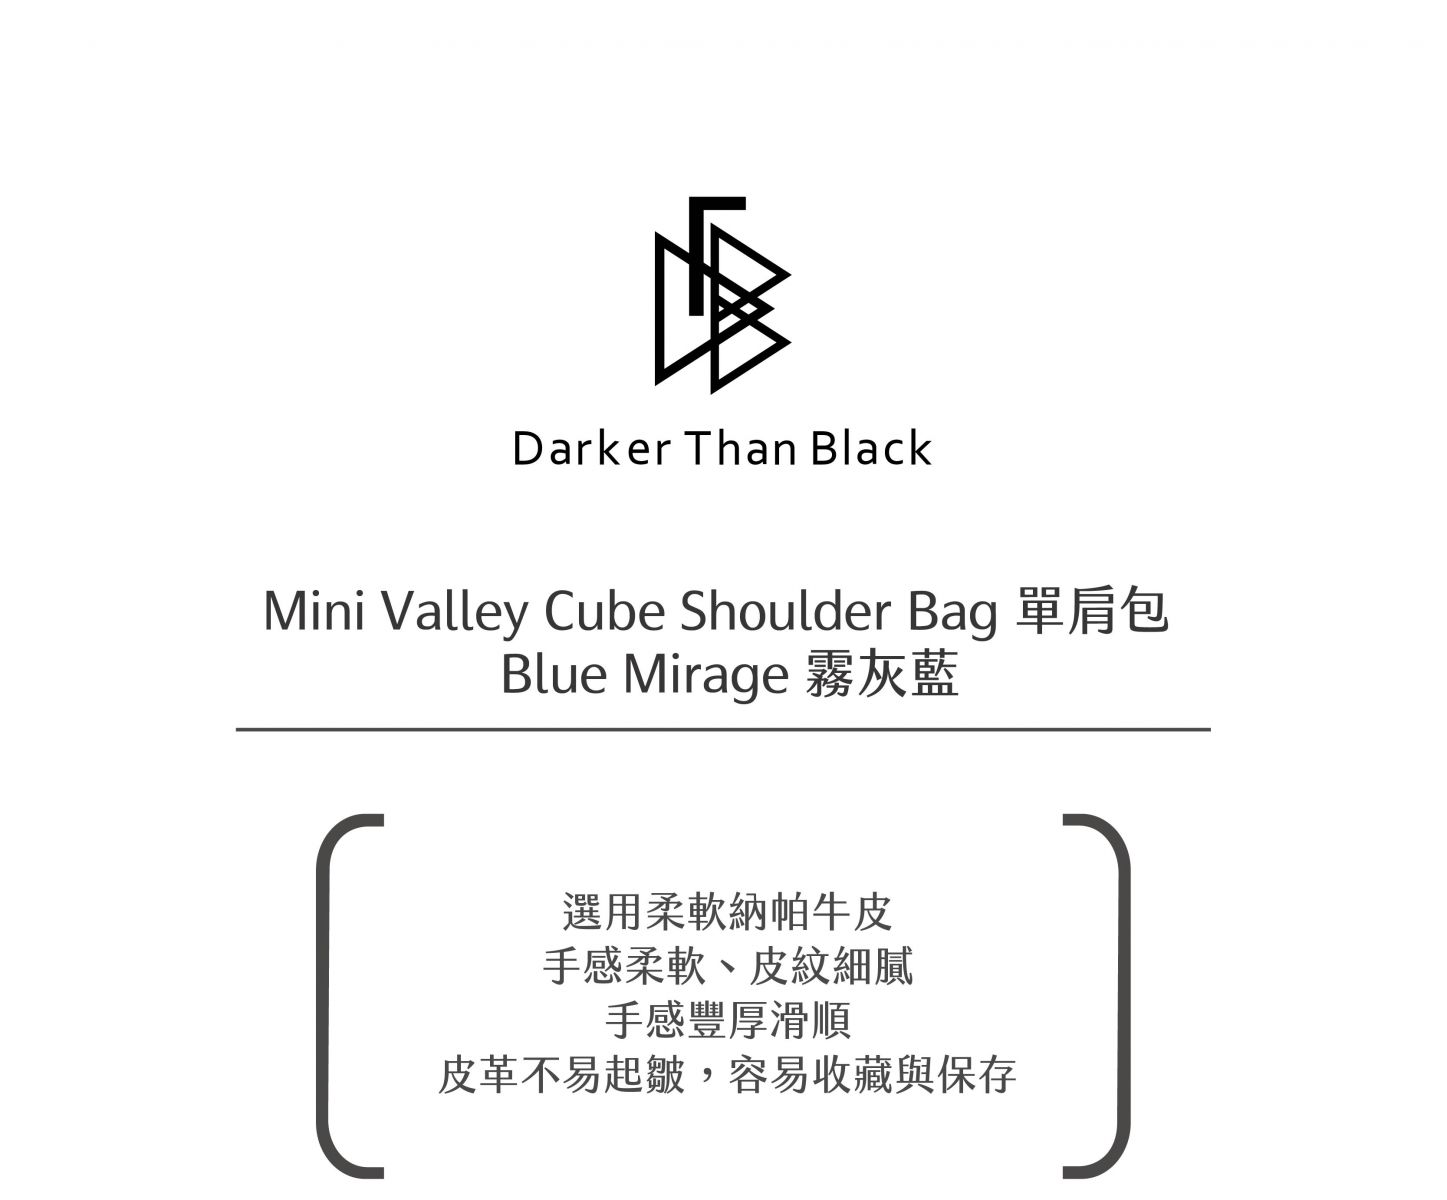 Mini Valley Cube Shoulder 迷你方型軟包(納帕牛皮) - Blue Mirage 霧灰藍